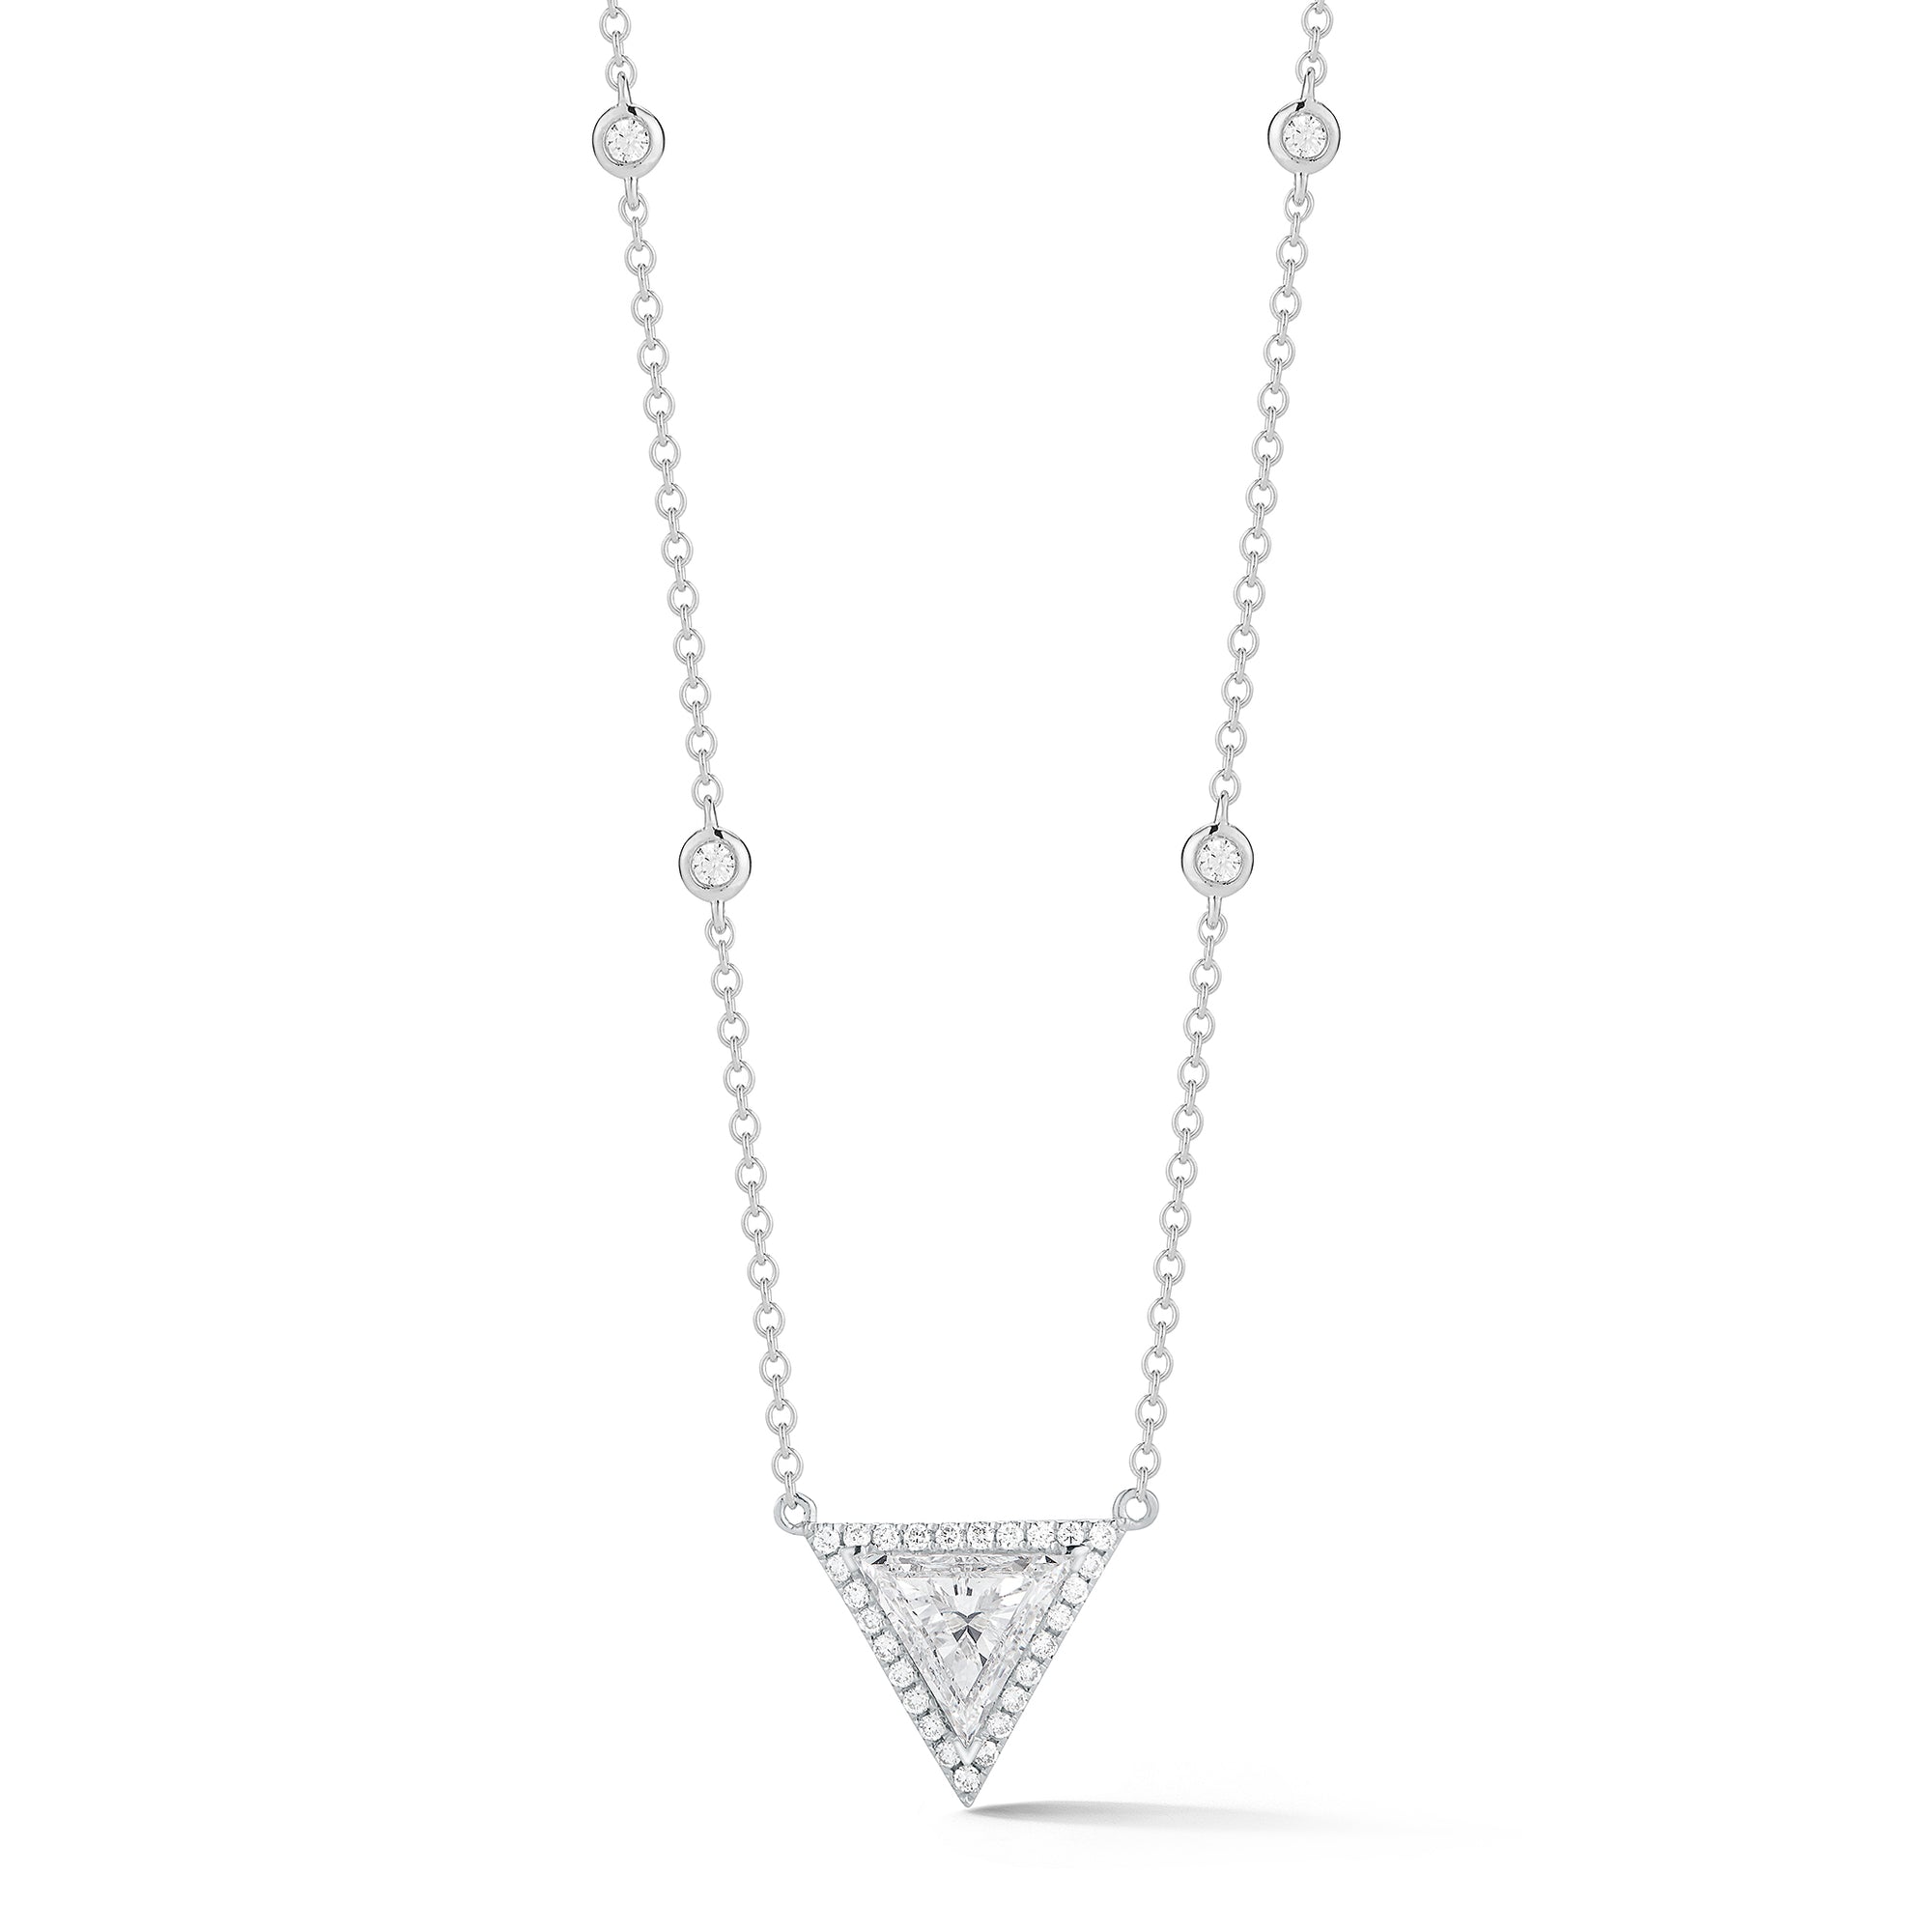 Trilliant-Cut Diamond Pendant Necklace     -18K gold weighing 3.66 grams  -1.03 ct trilliant-cut diamond, GIA-graded E-color, VS2 clarity.  -31 round shared prong-set diamonds totaling 0.26 carats  Size 12 millimeters diameter.